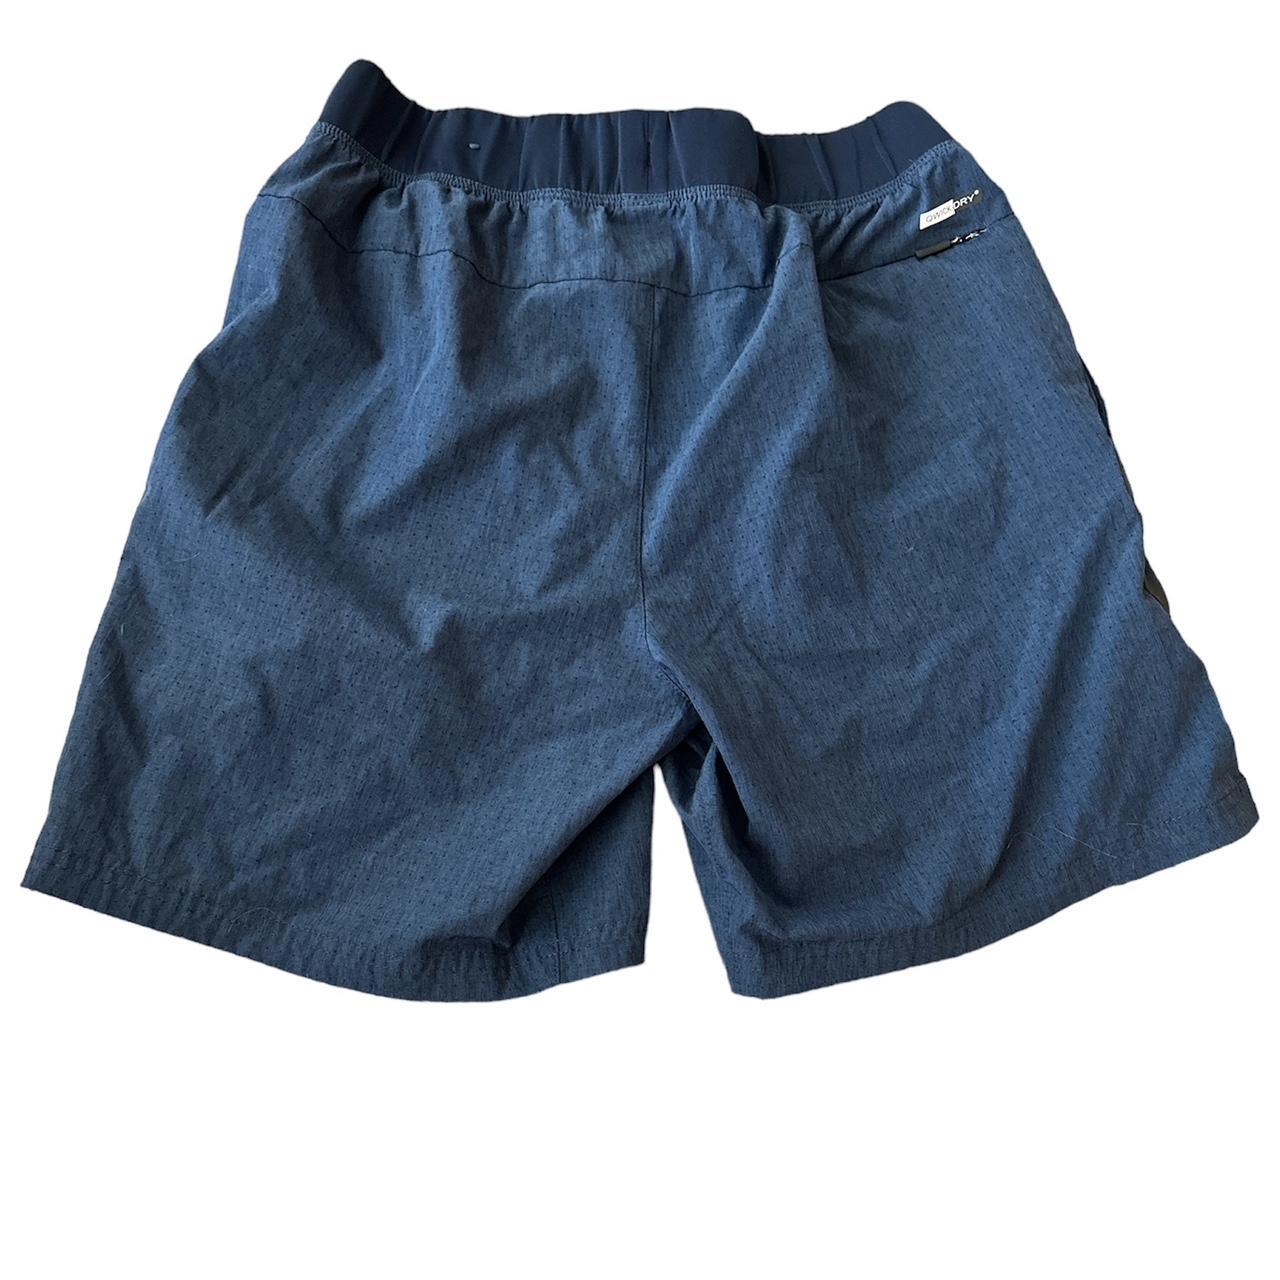 Men’s Unipro Athletic Shorts - Depop